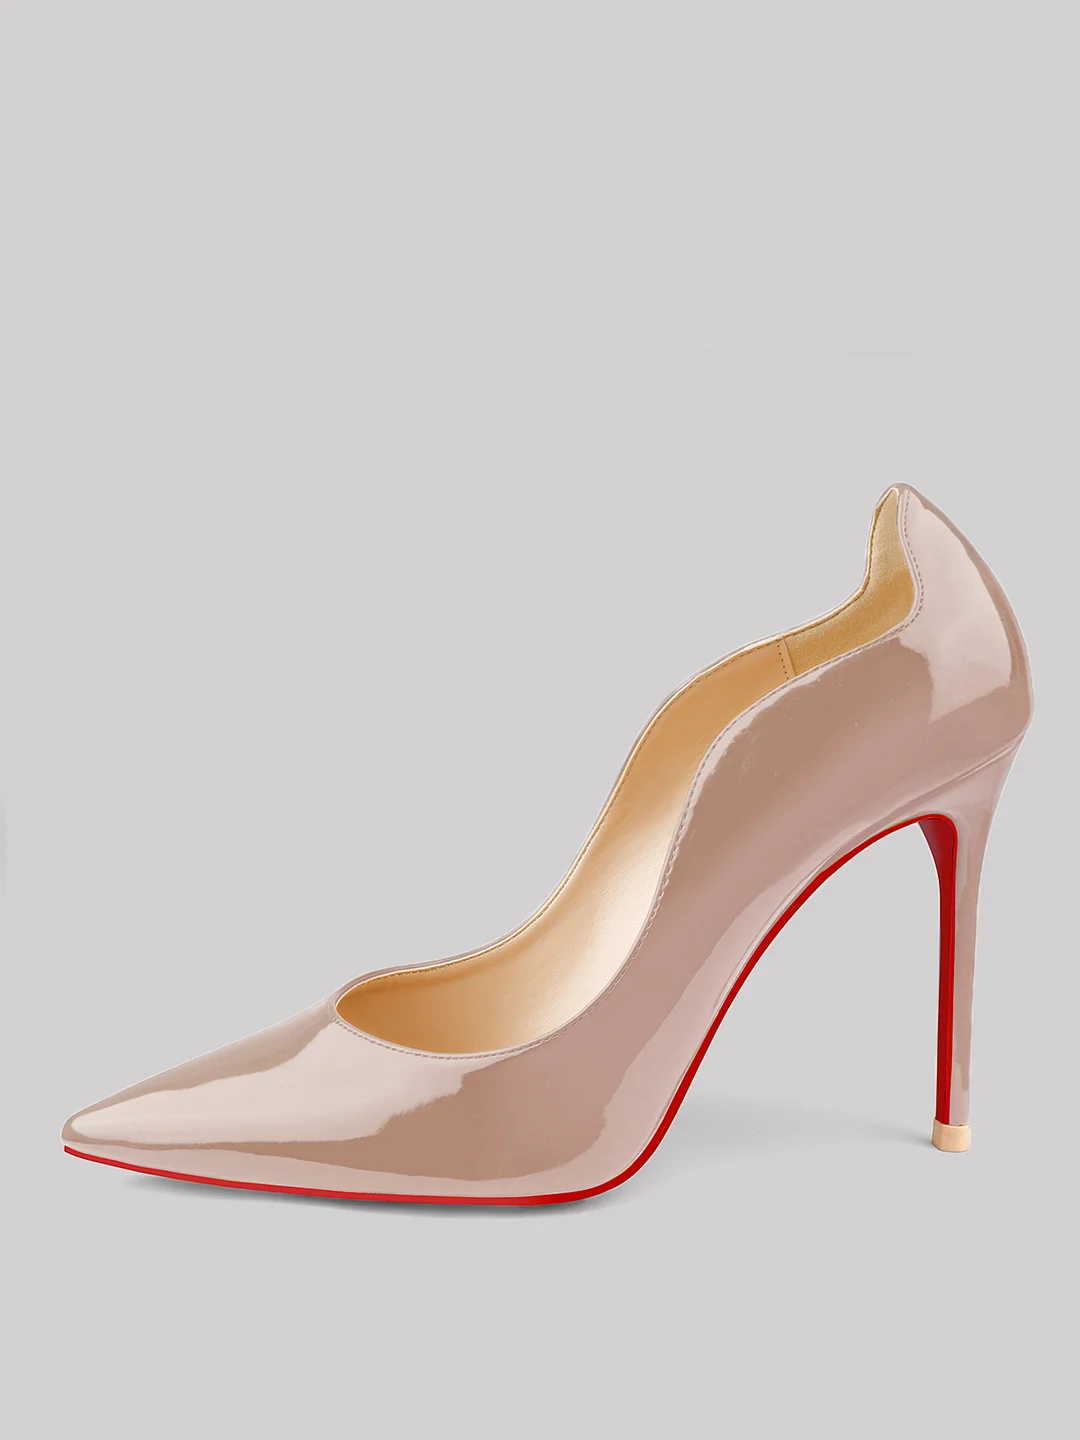 3.94" Women's Party Wedding Classic Pumps Fashion Edge Design Red Bottom High Heels Stilettos